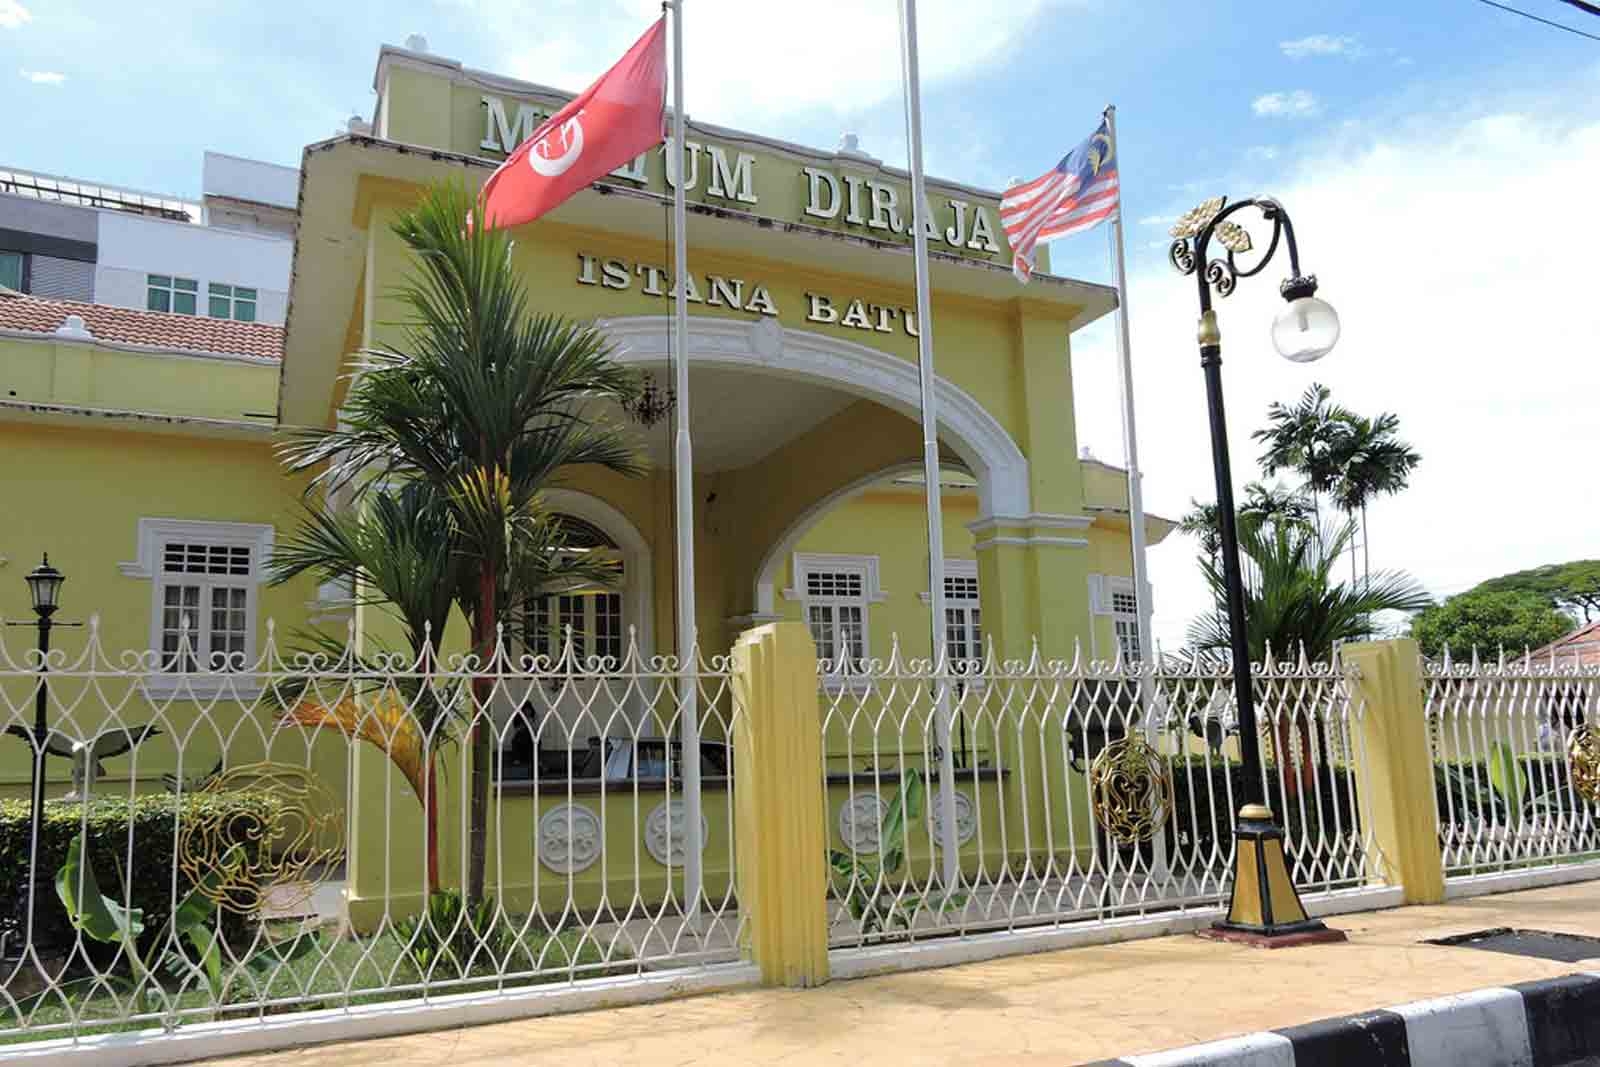 The Royal Museum Muzium Diraja Istana Batu Kelantan Malaysia Gokayu Your Travel Guide